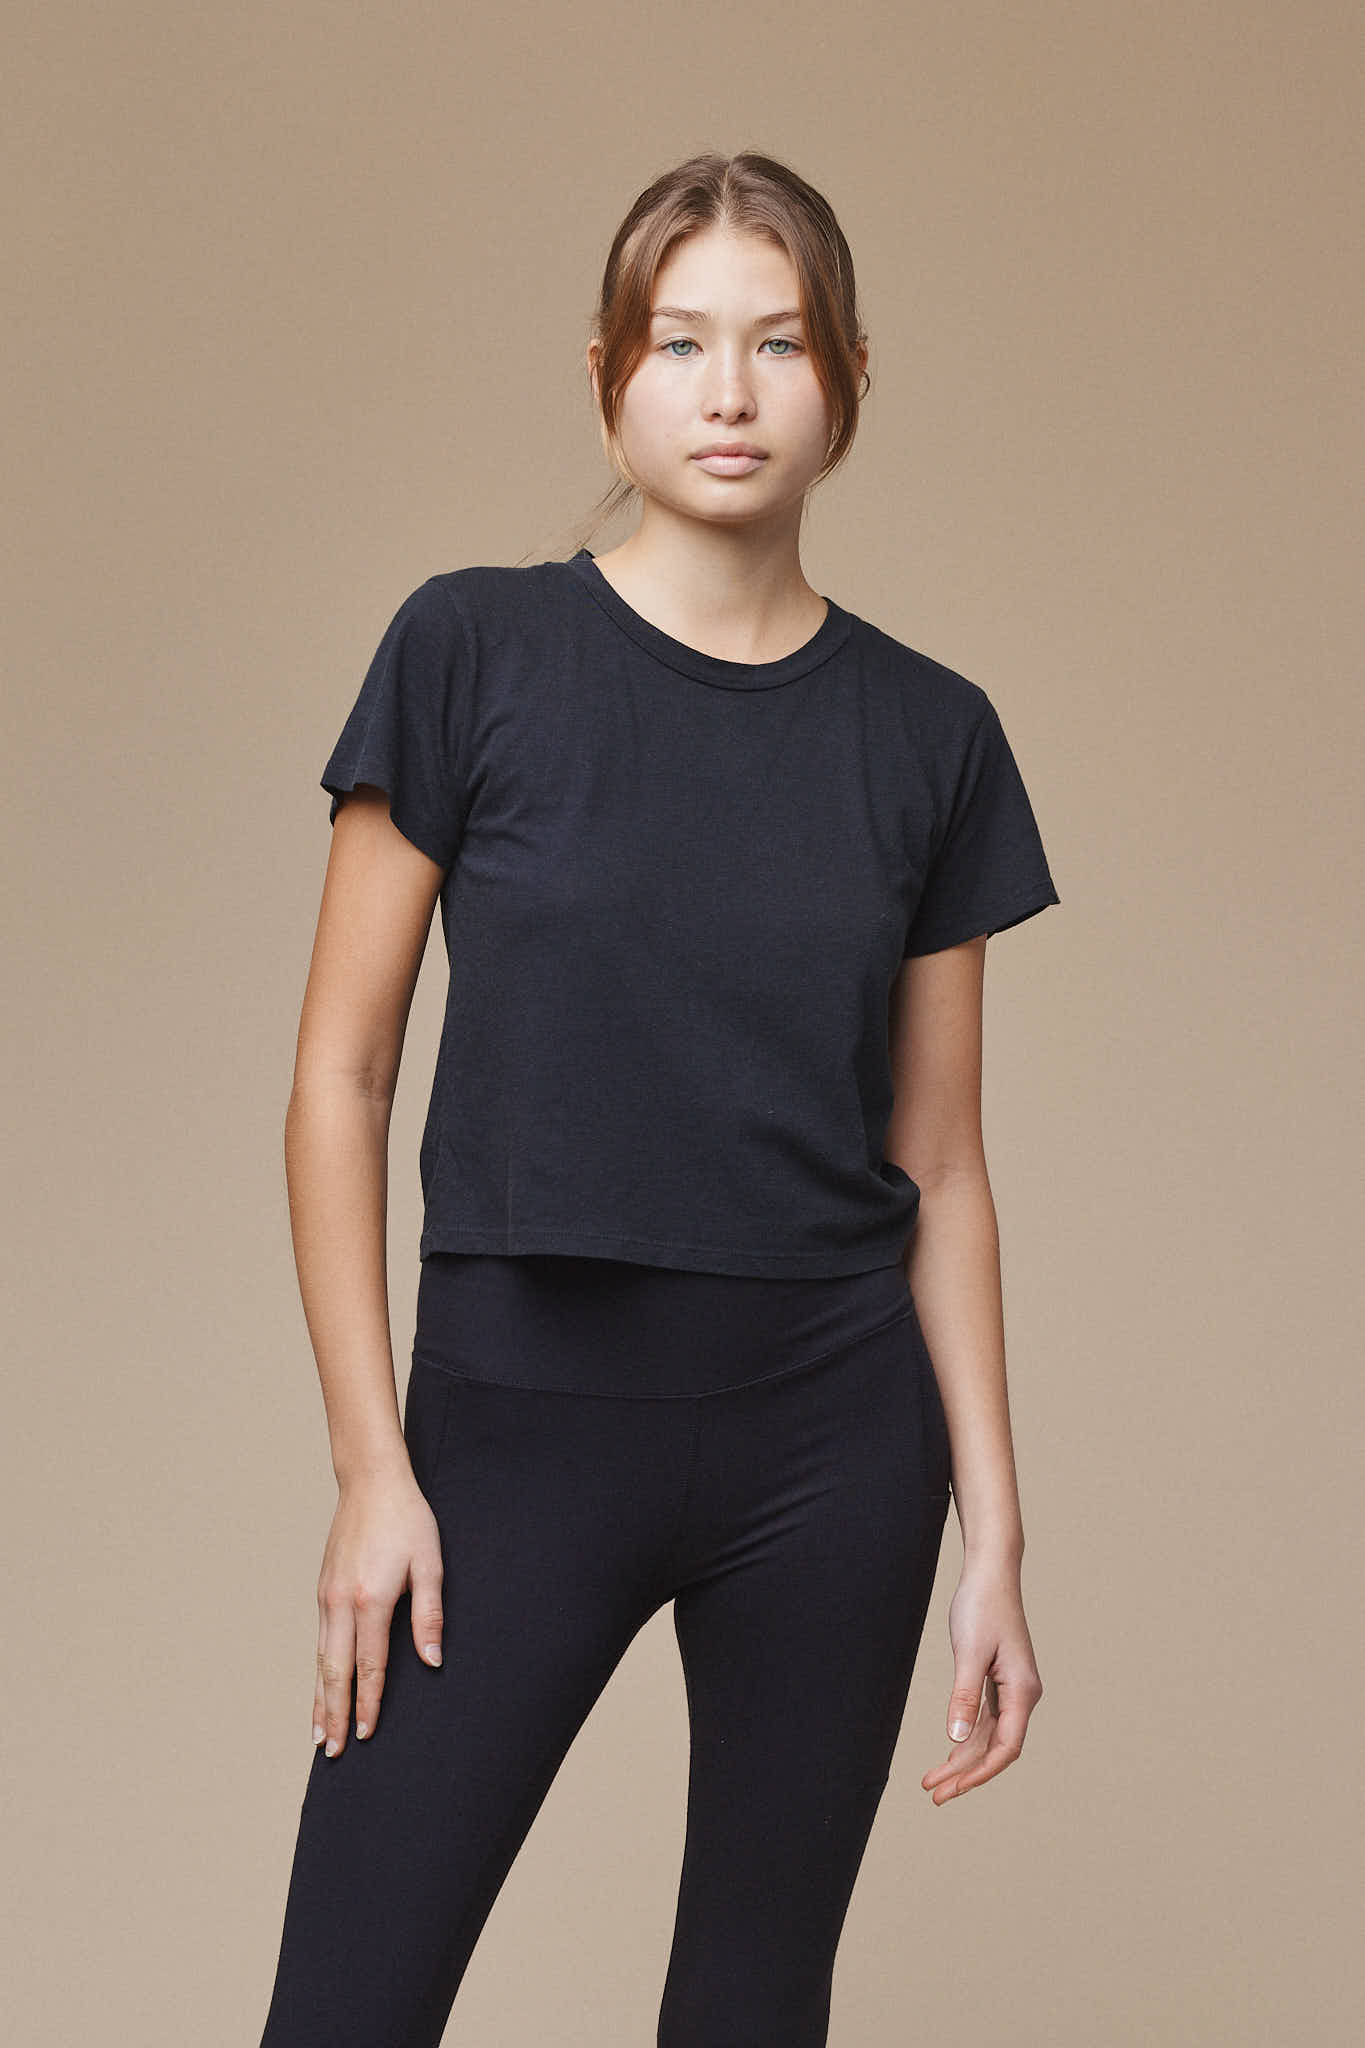 Cropped Ojai Tee | Jungmaven Hemp Clothing & Accessories / model_desc: Katriel is 5’9” wearing XS